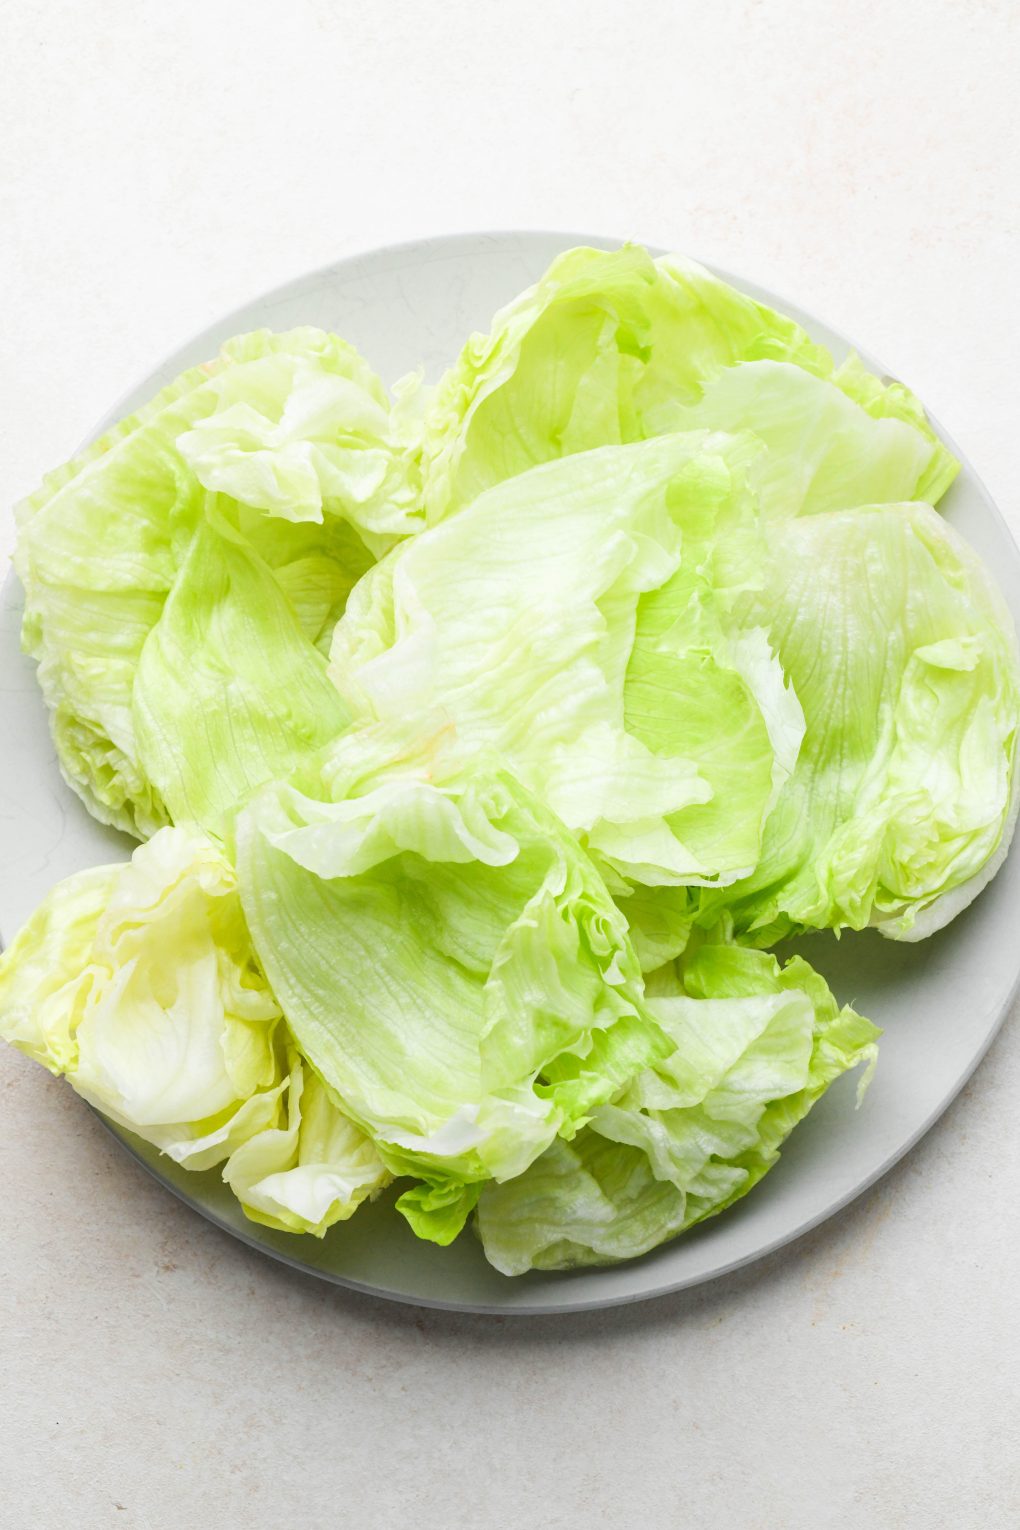 Iceberg lettuce wedges on a platter for buns in lettuce wrapped burgers.